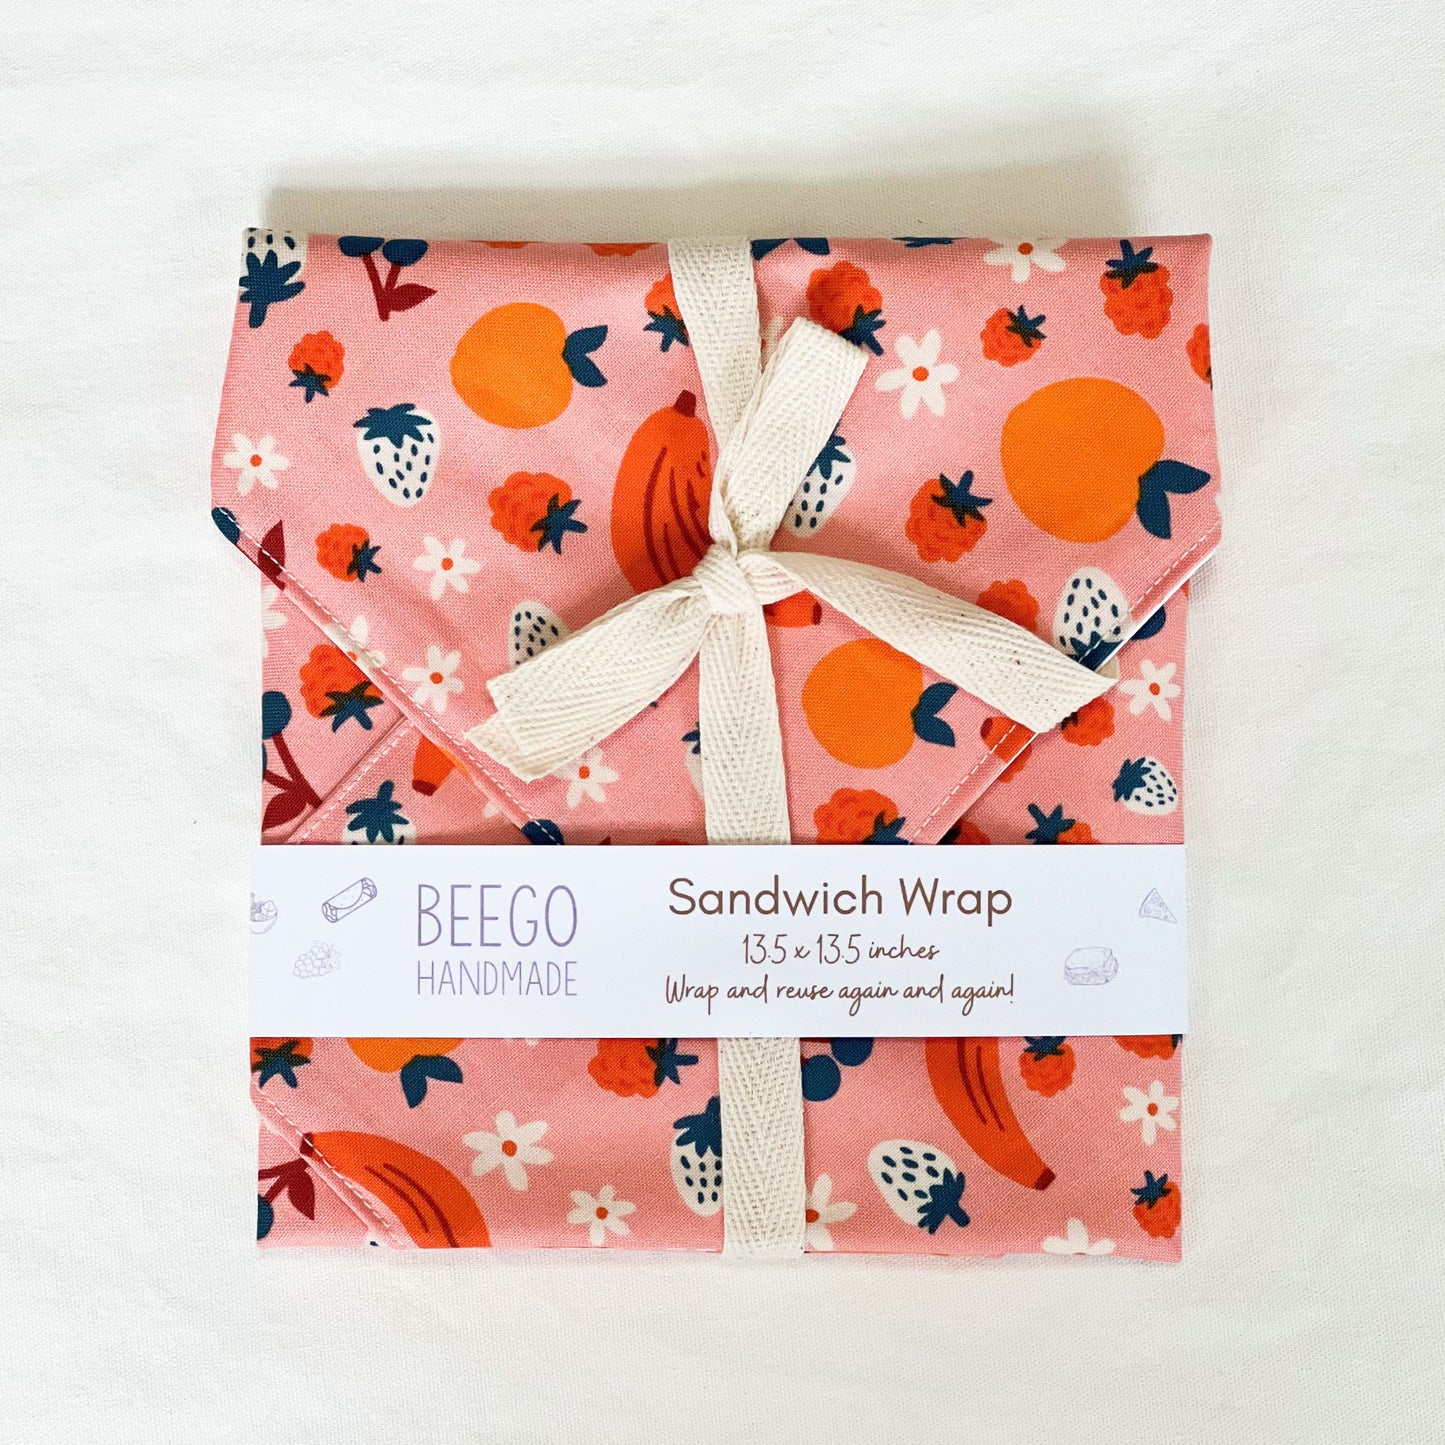 Beego Handmade Sandwich Wrap Fruit Salad Singapore